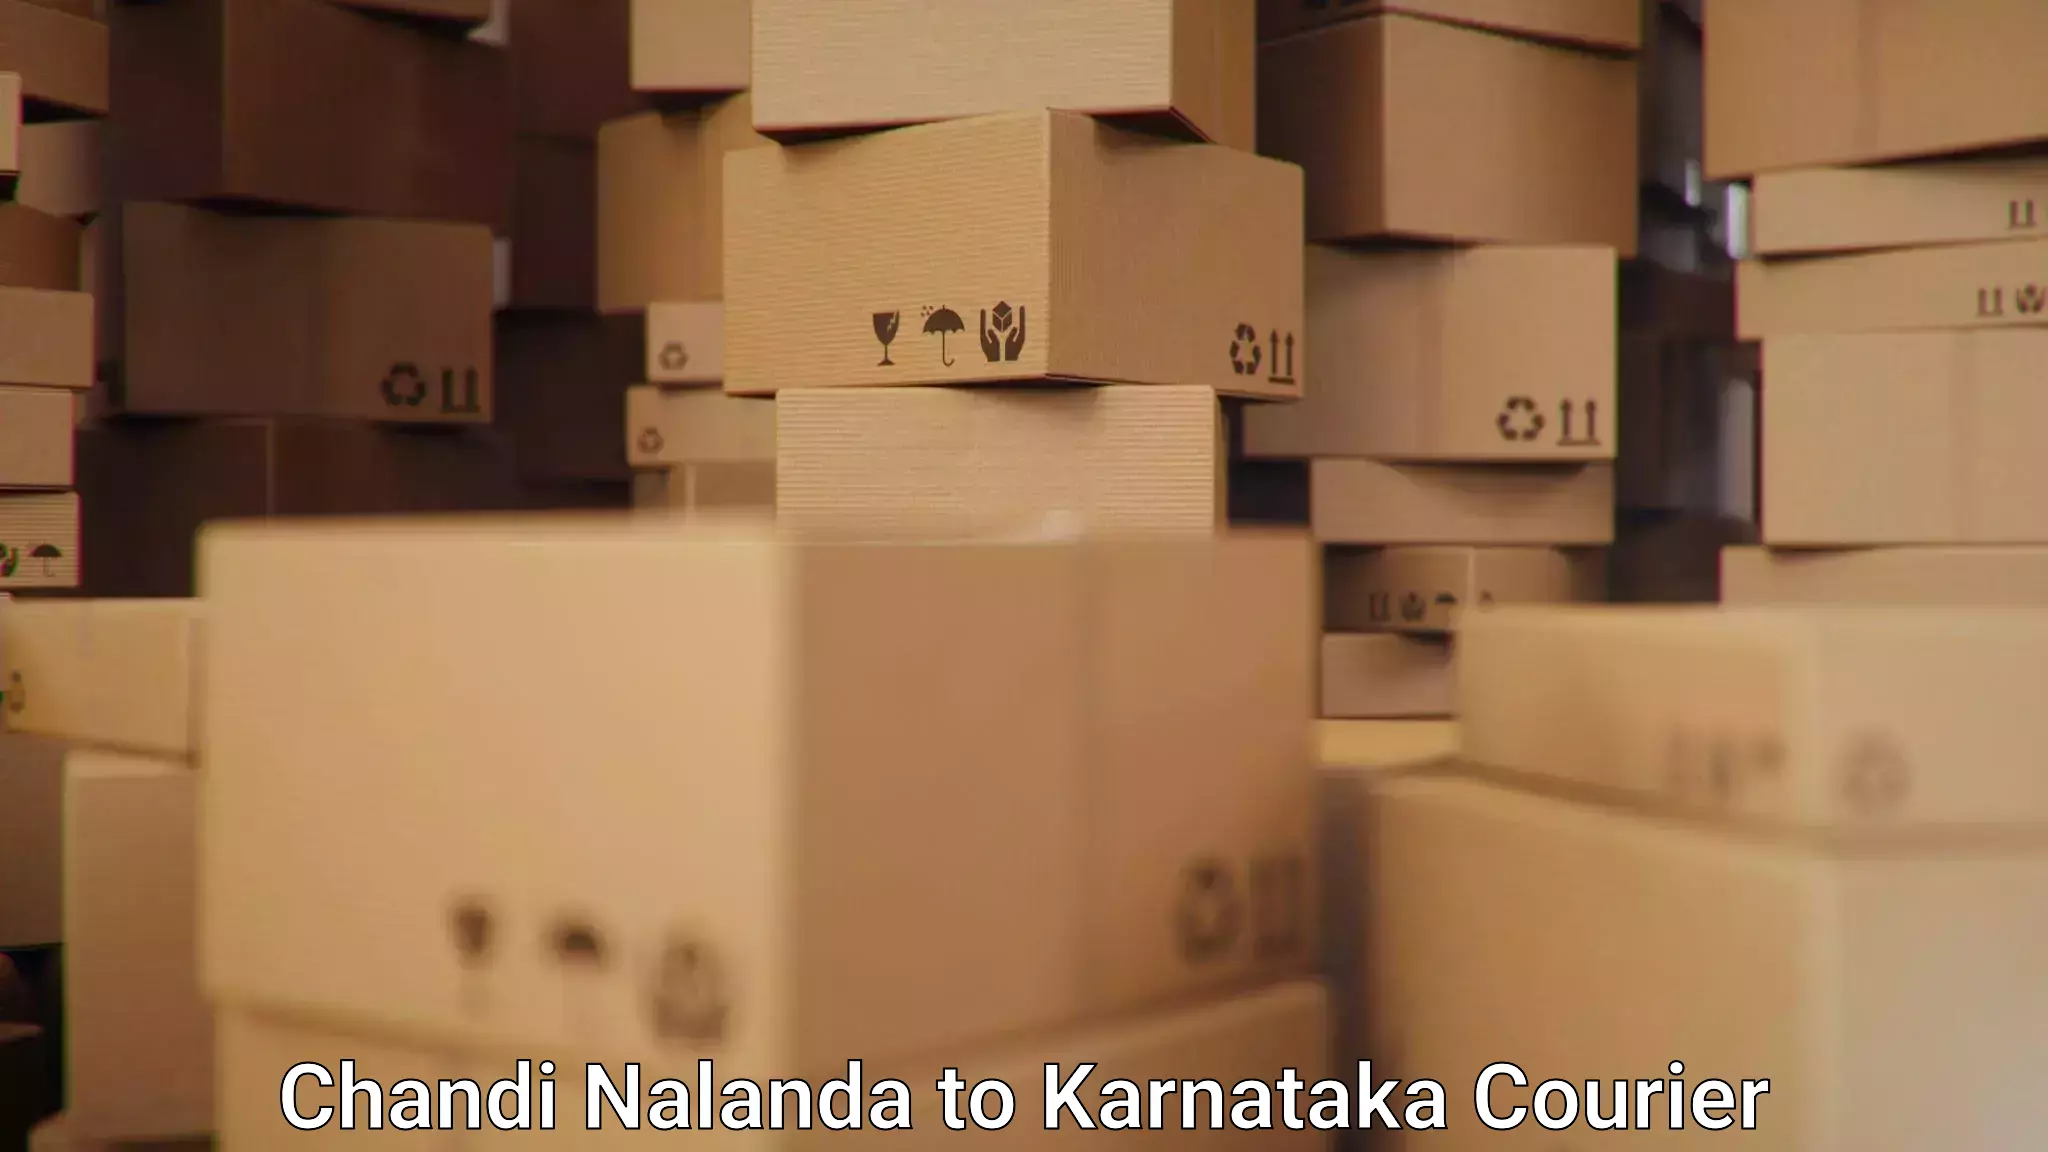 Multi-service courier options Chandi Nalanda to Karnataka